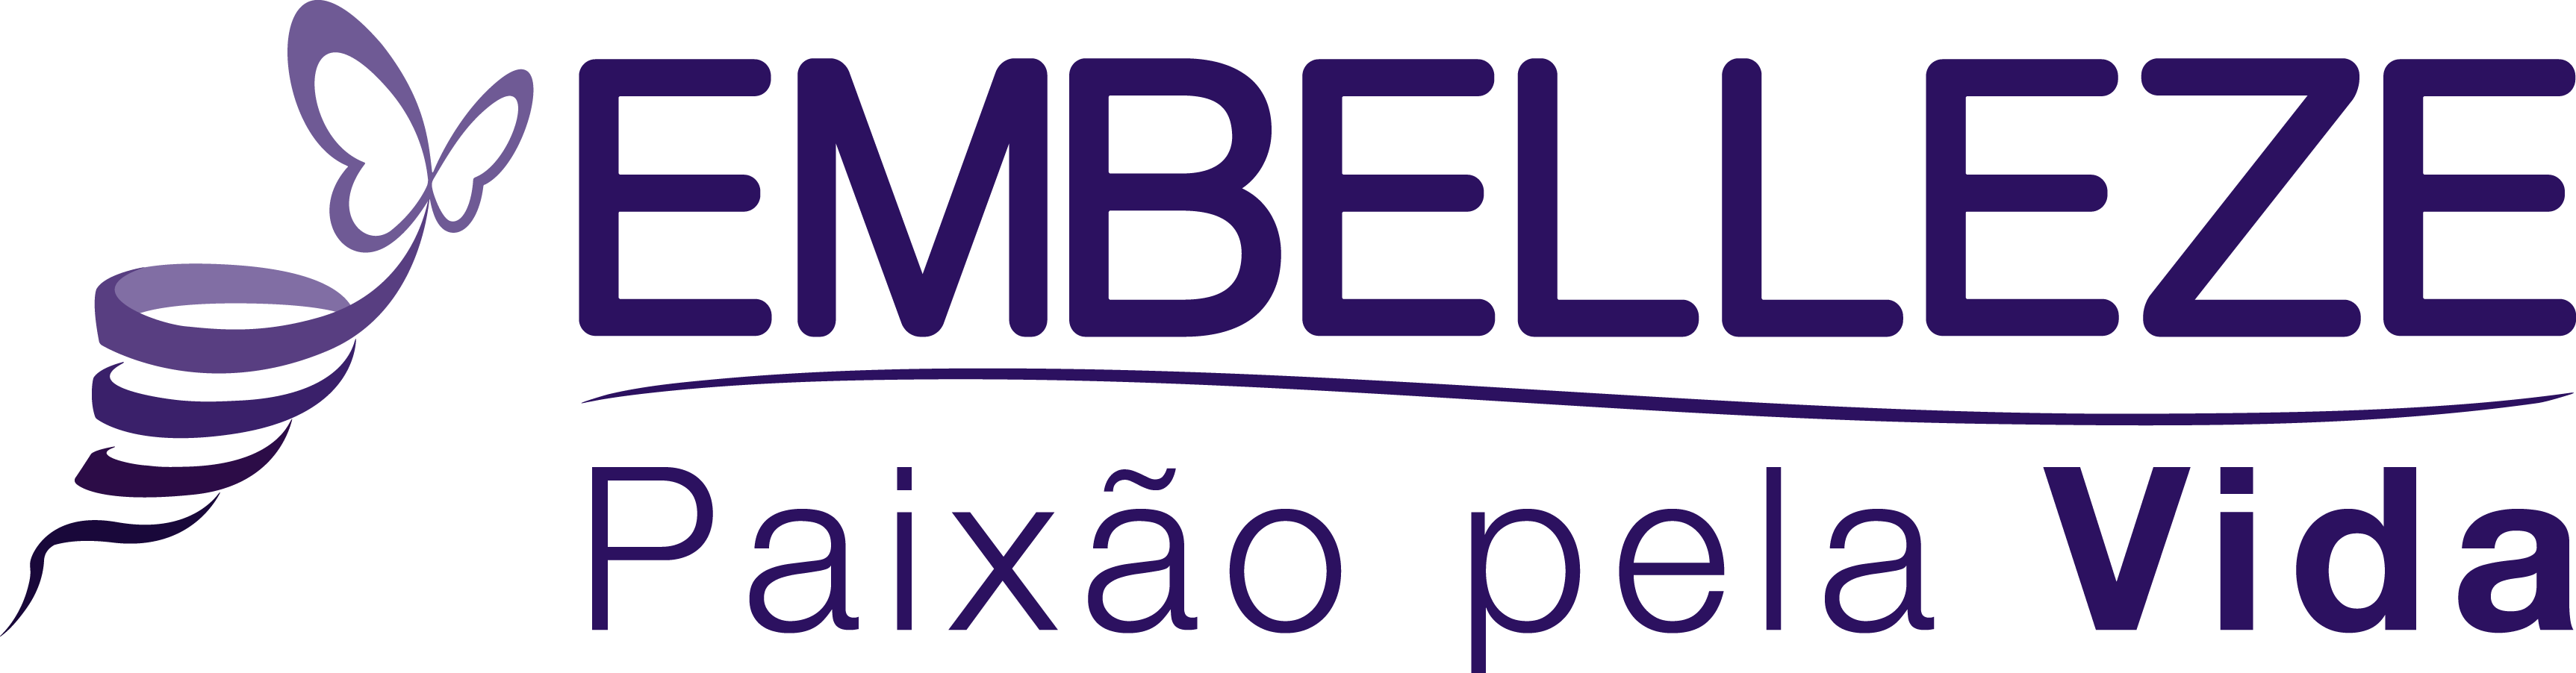 Embelleze Logo photo - 1